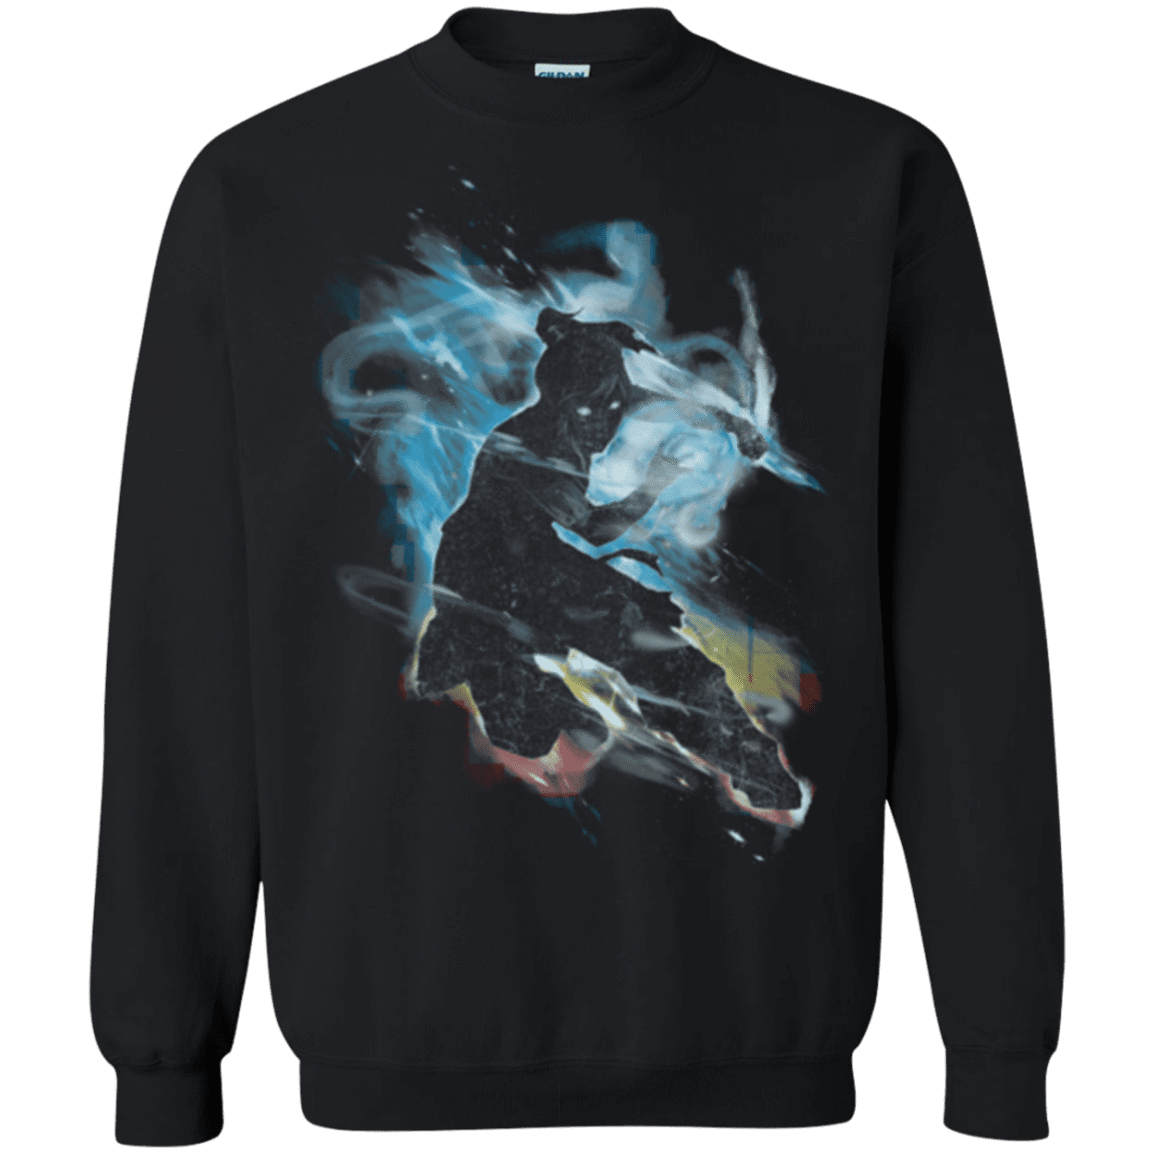 Sweatshirts Black / Small Dancing With Elements Korra Crewneck Sweatshirt